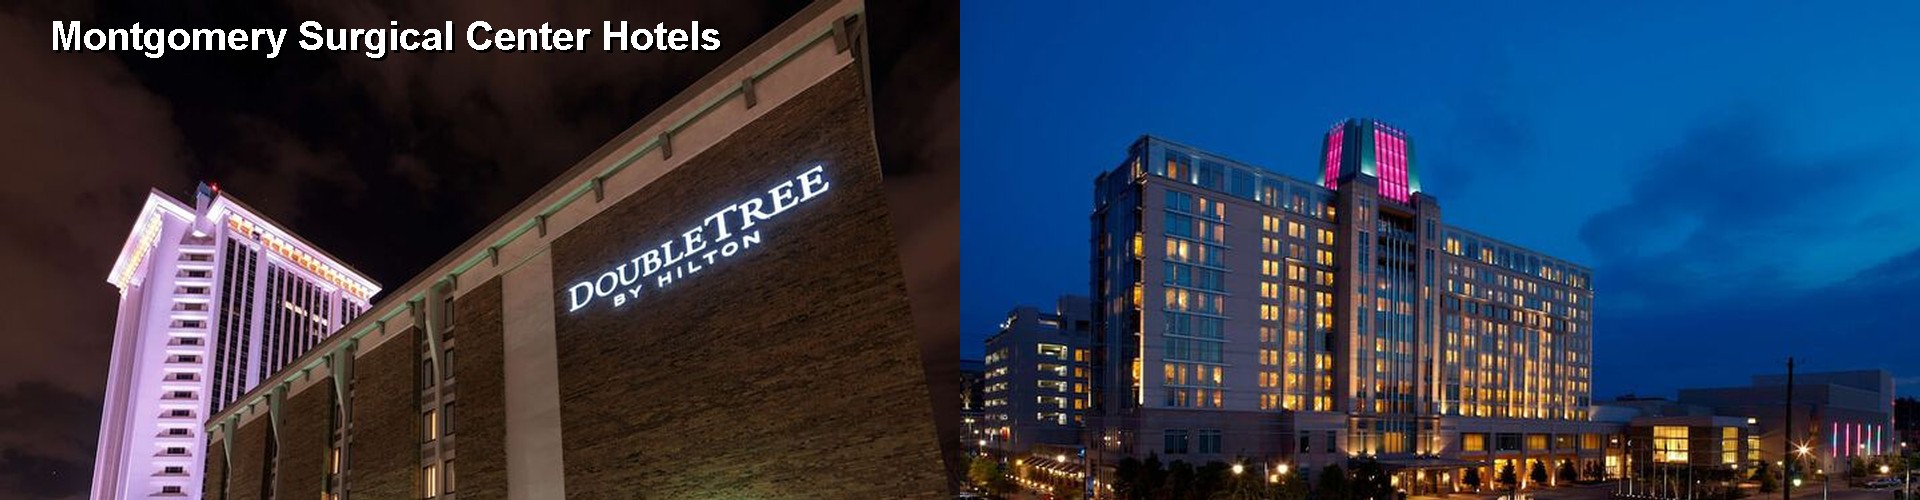 5 Best Hotels near Montgomery Surgical Center